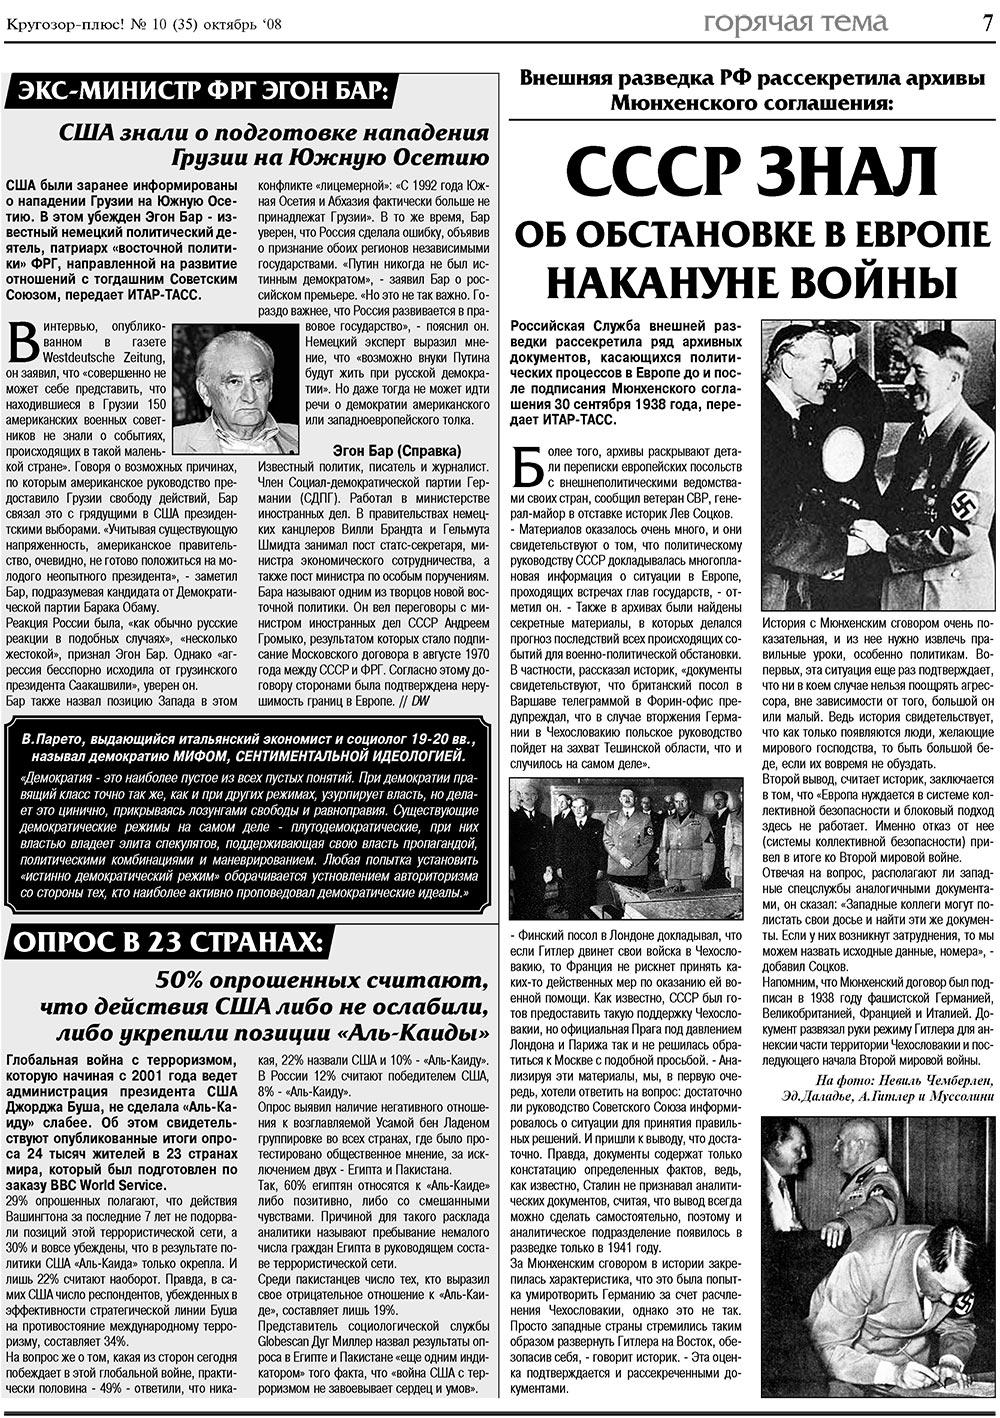 Кругозор плюс! (газета). 2008 год, номер 10, стр. 7